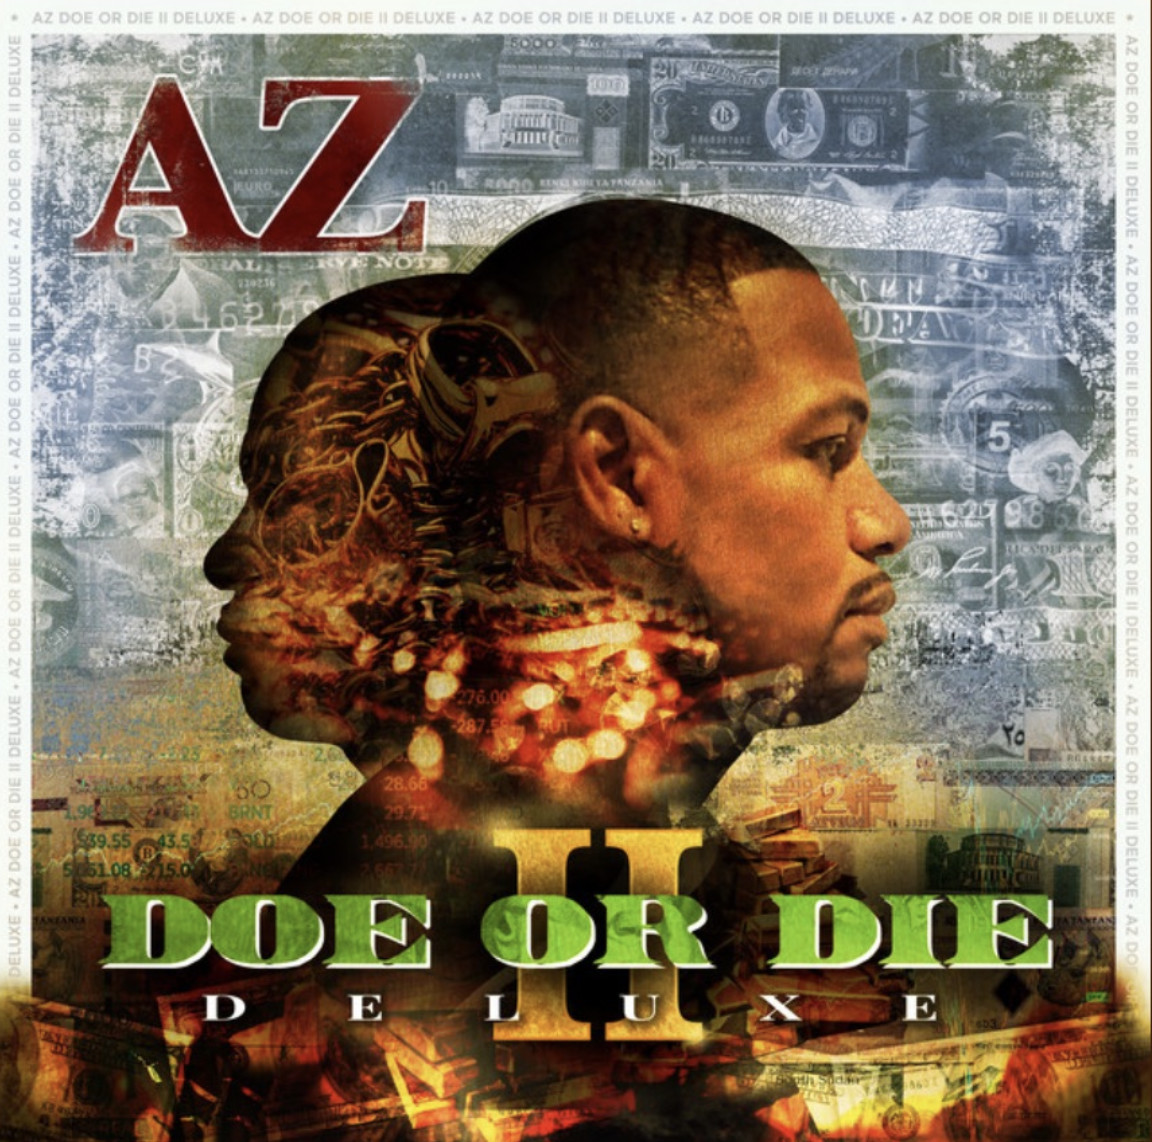 AZ Returns With “Doe or Die II (Deluxe Edition)”